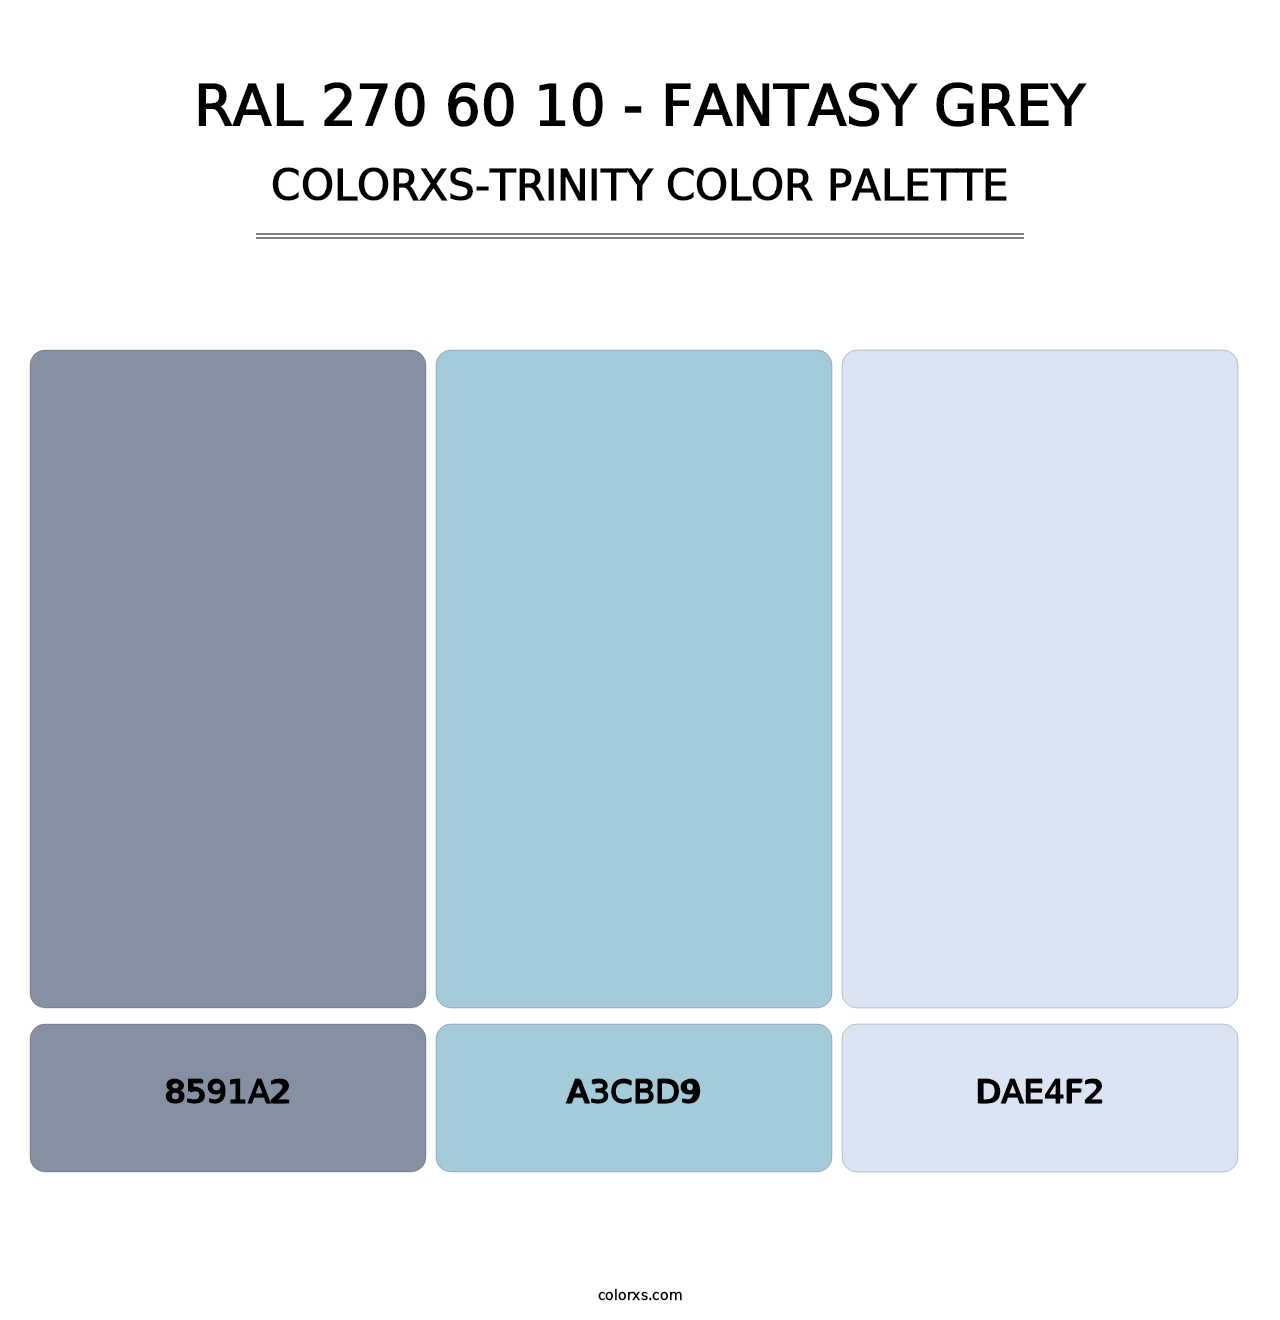 RAL 270 60 10 - Fantasy Grey - Colorxs Trinity Palette